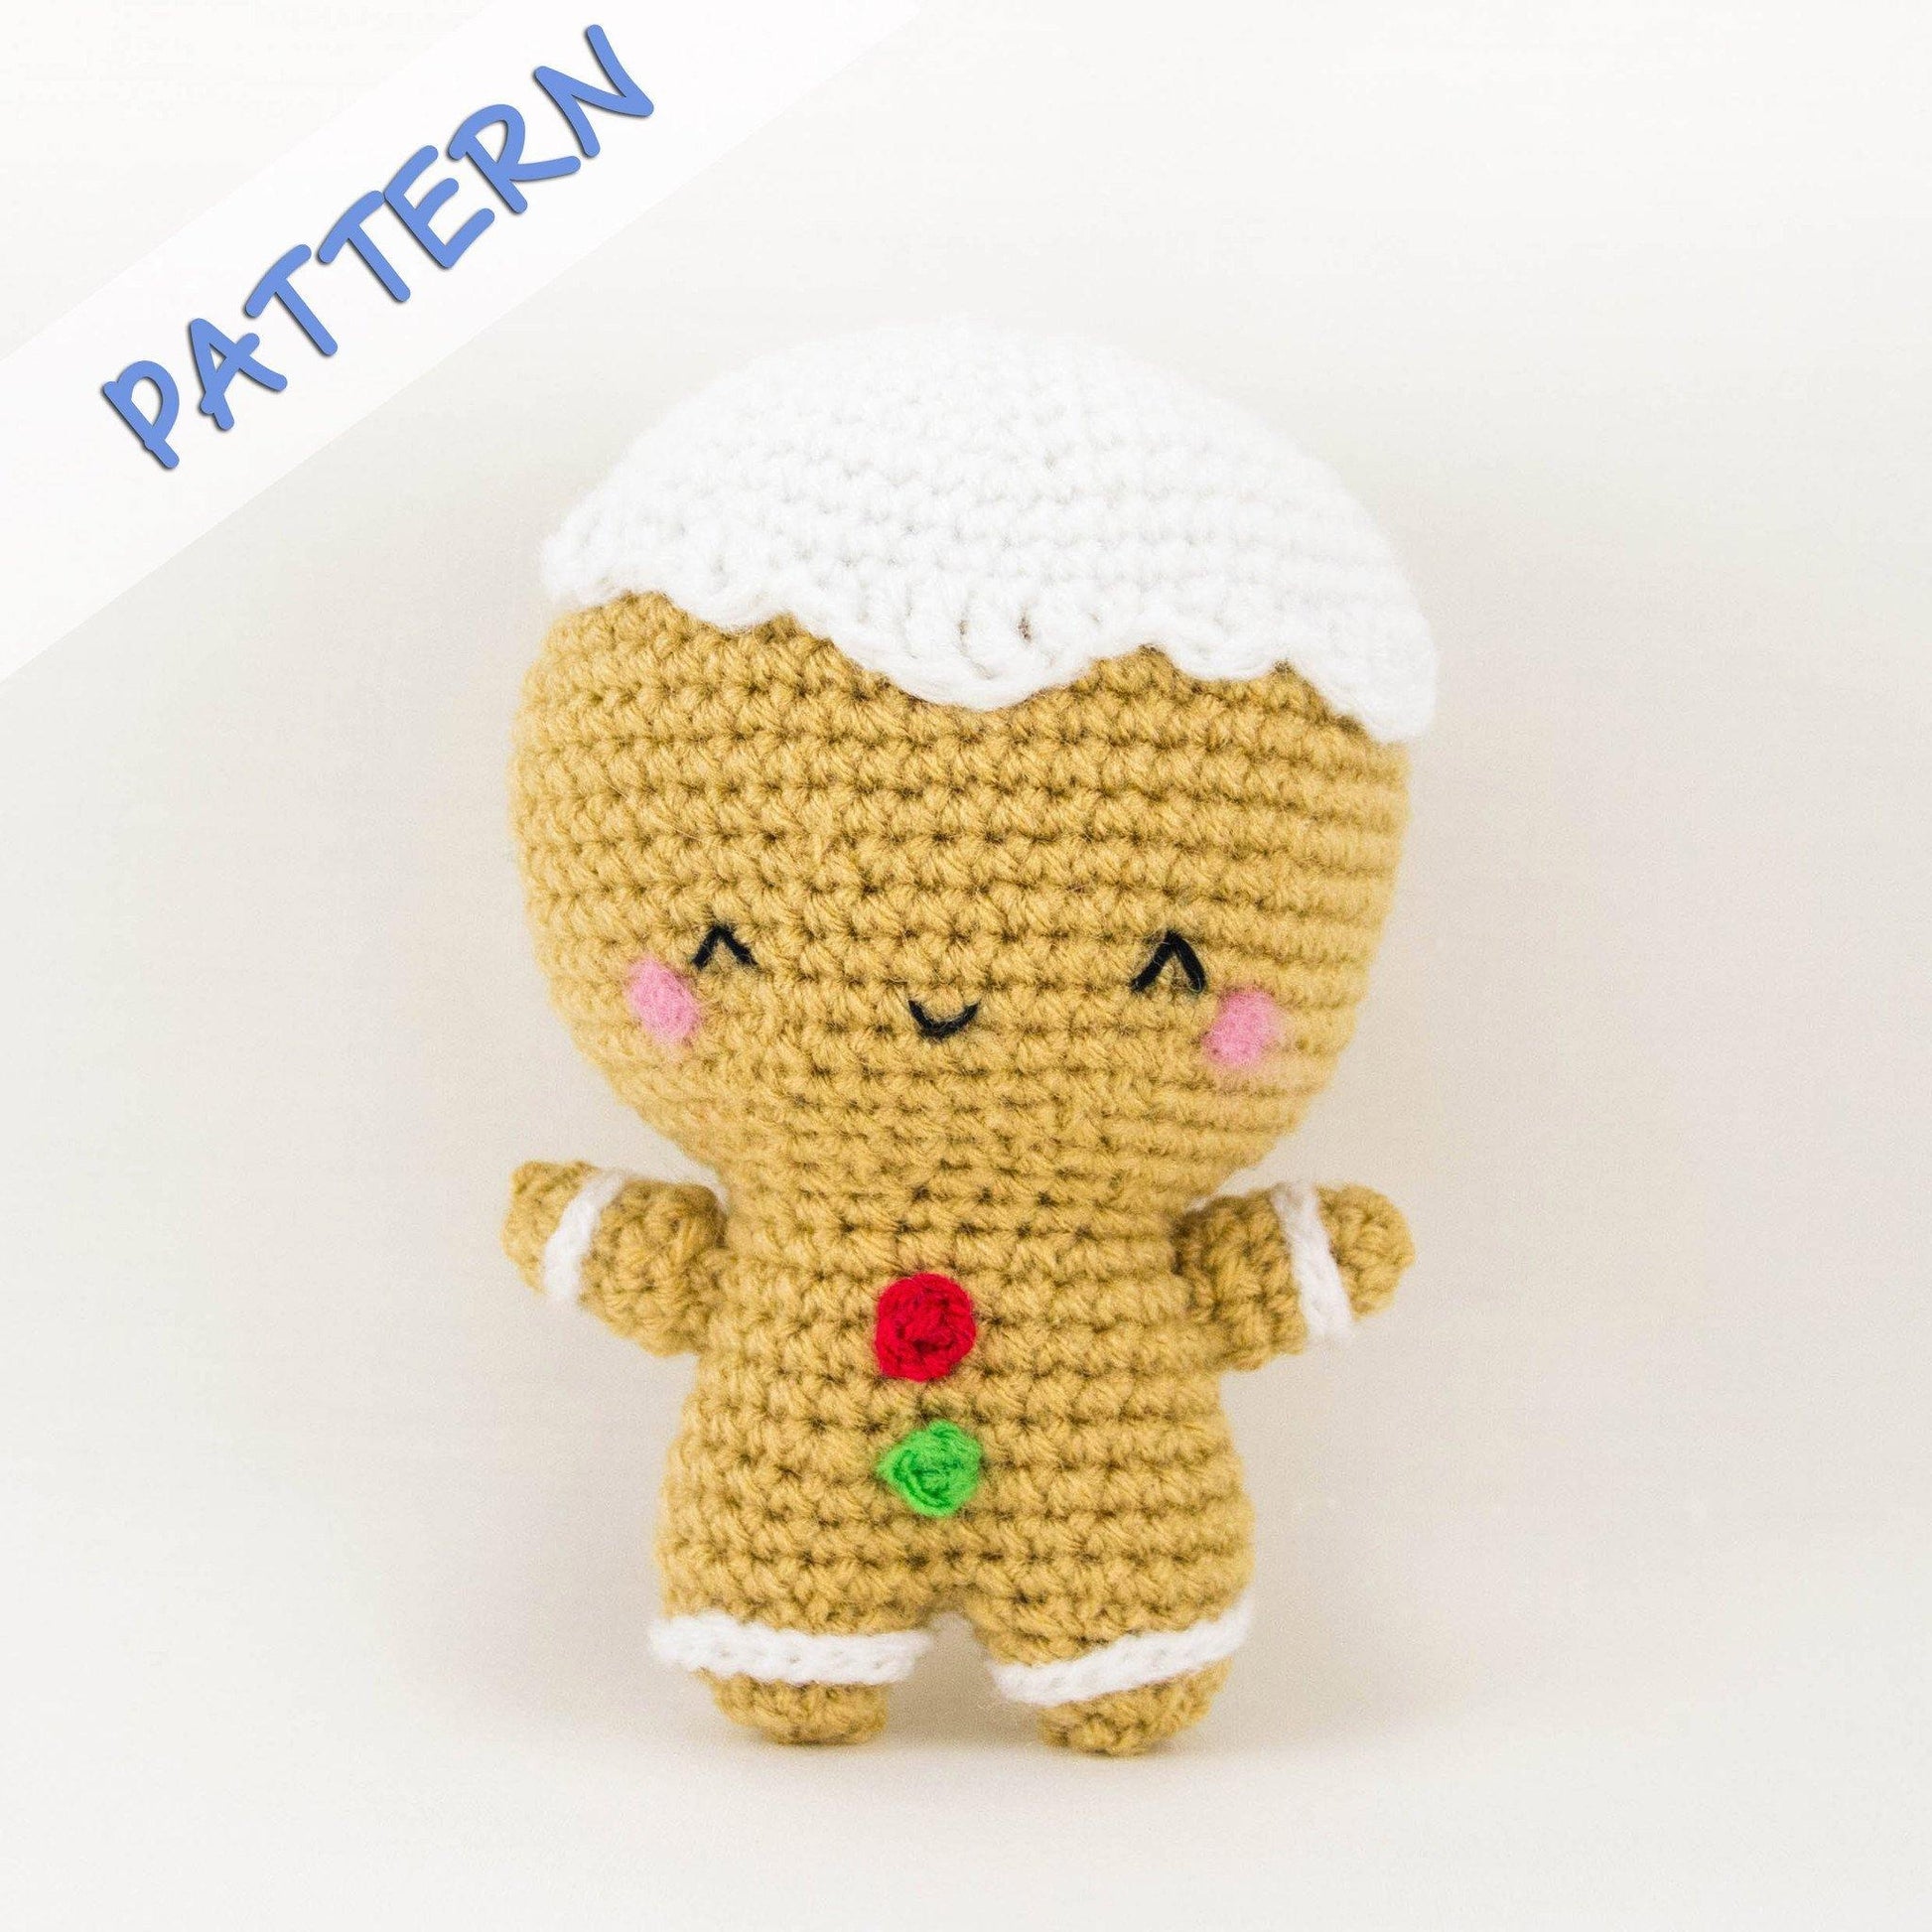 Ginger the Gingerbread Man Crochet Amigurumi Pattern – Snacksies Handicraft